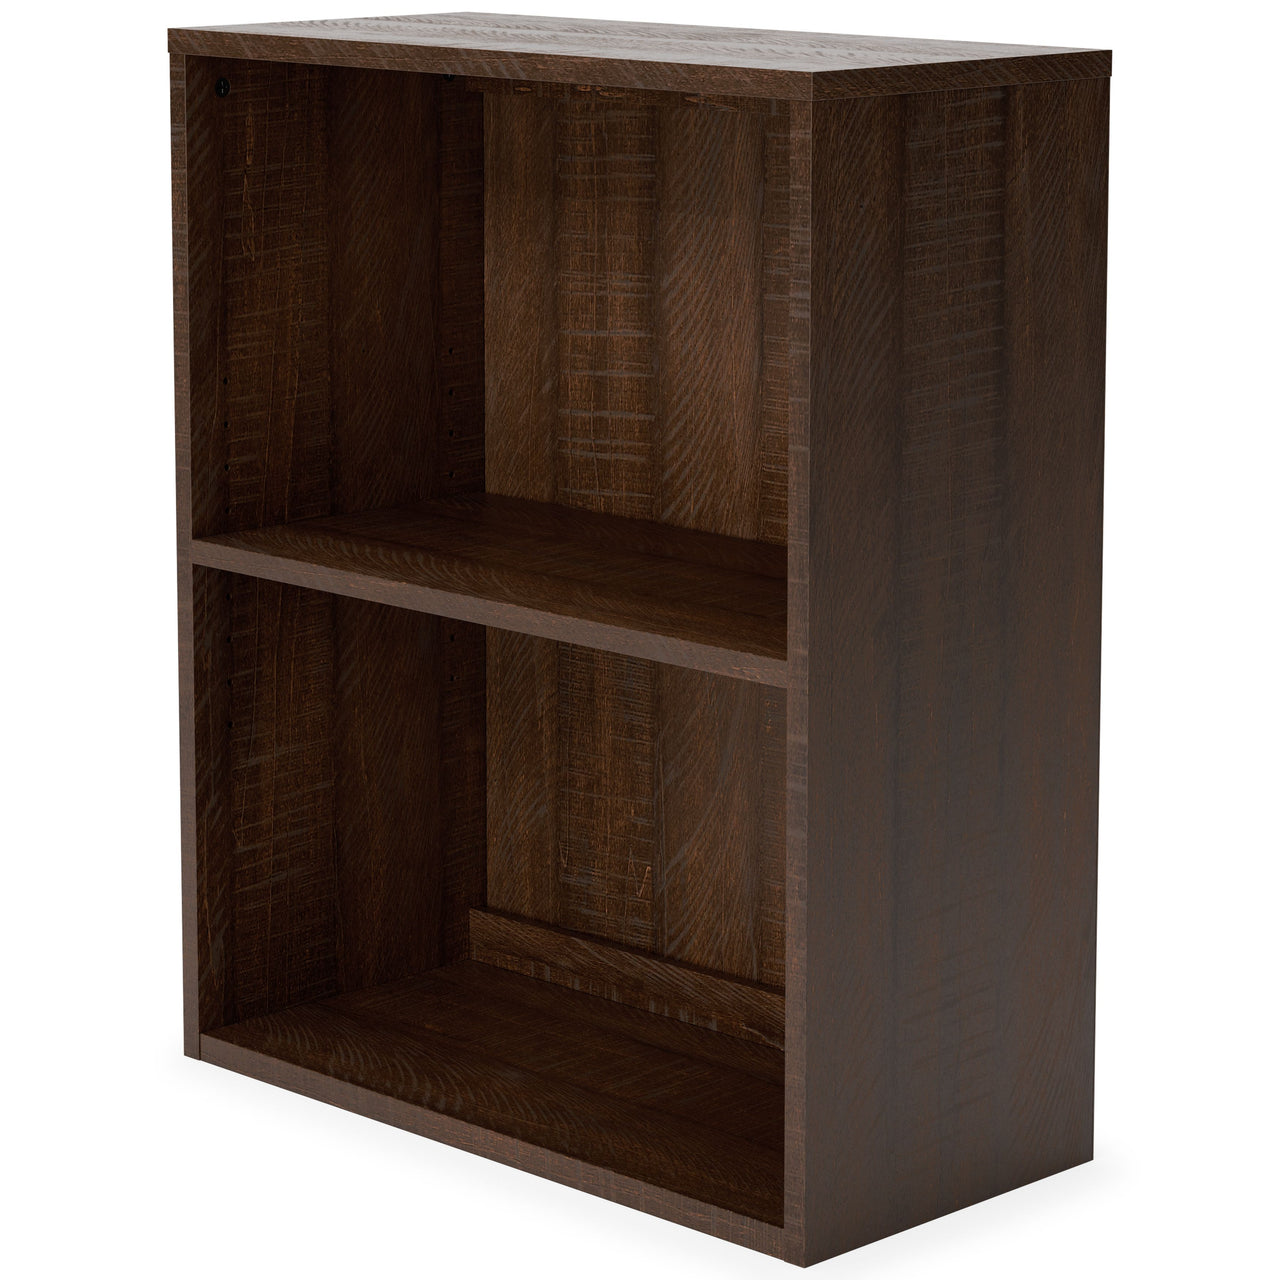 Camiburg - Bookcase - Tony's Home Furnishings